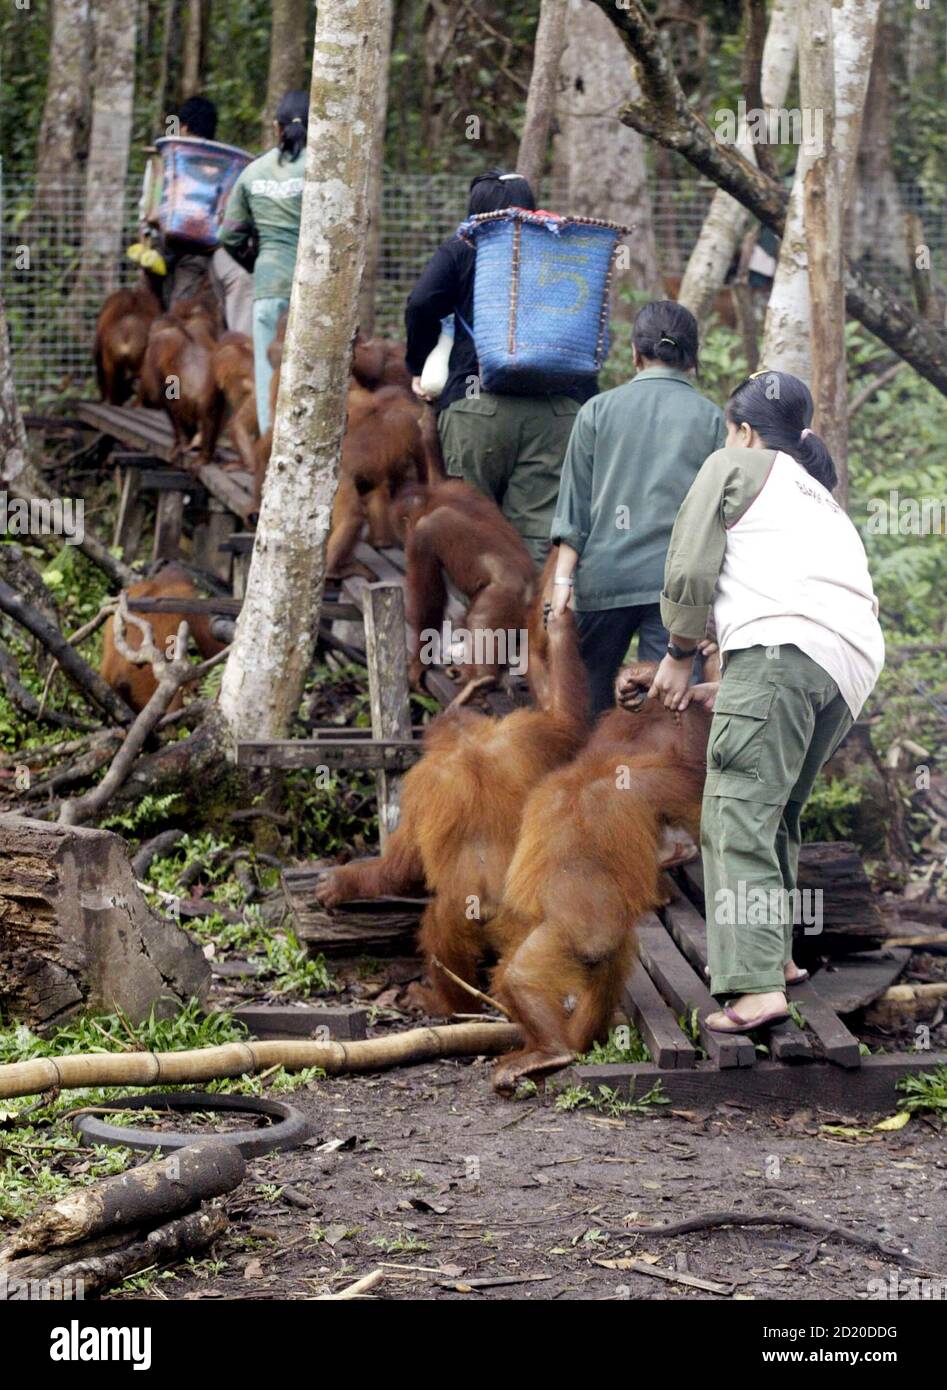 Animal caretakers escort orangutans (Pongo Pygmaeus) to a training ground at Nyaru Menteng Rehabilitation and Reintroduction Centre, in the of Palangkaraya, in Indonesia's Central Kalimantan province November 22, 2006. REUTERS/Dadang Tri (